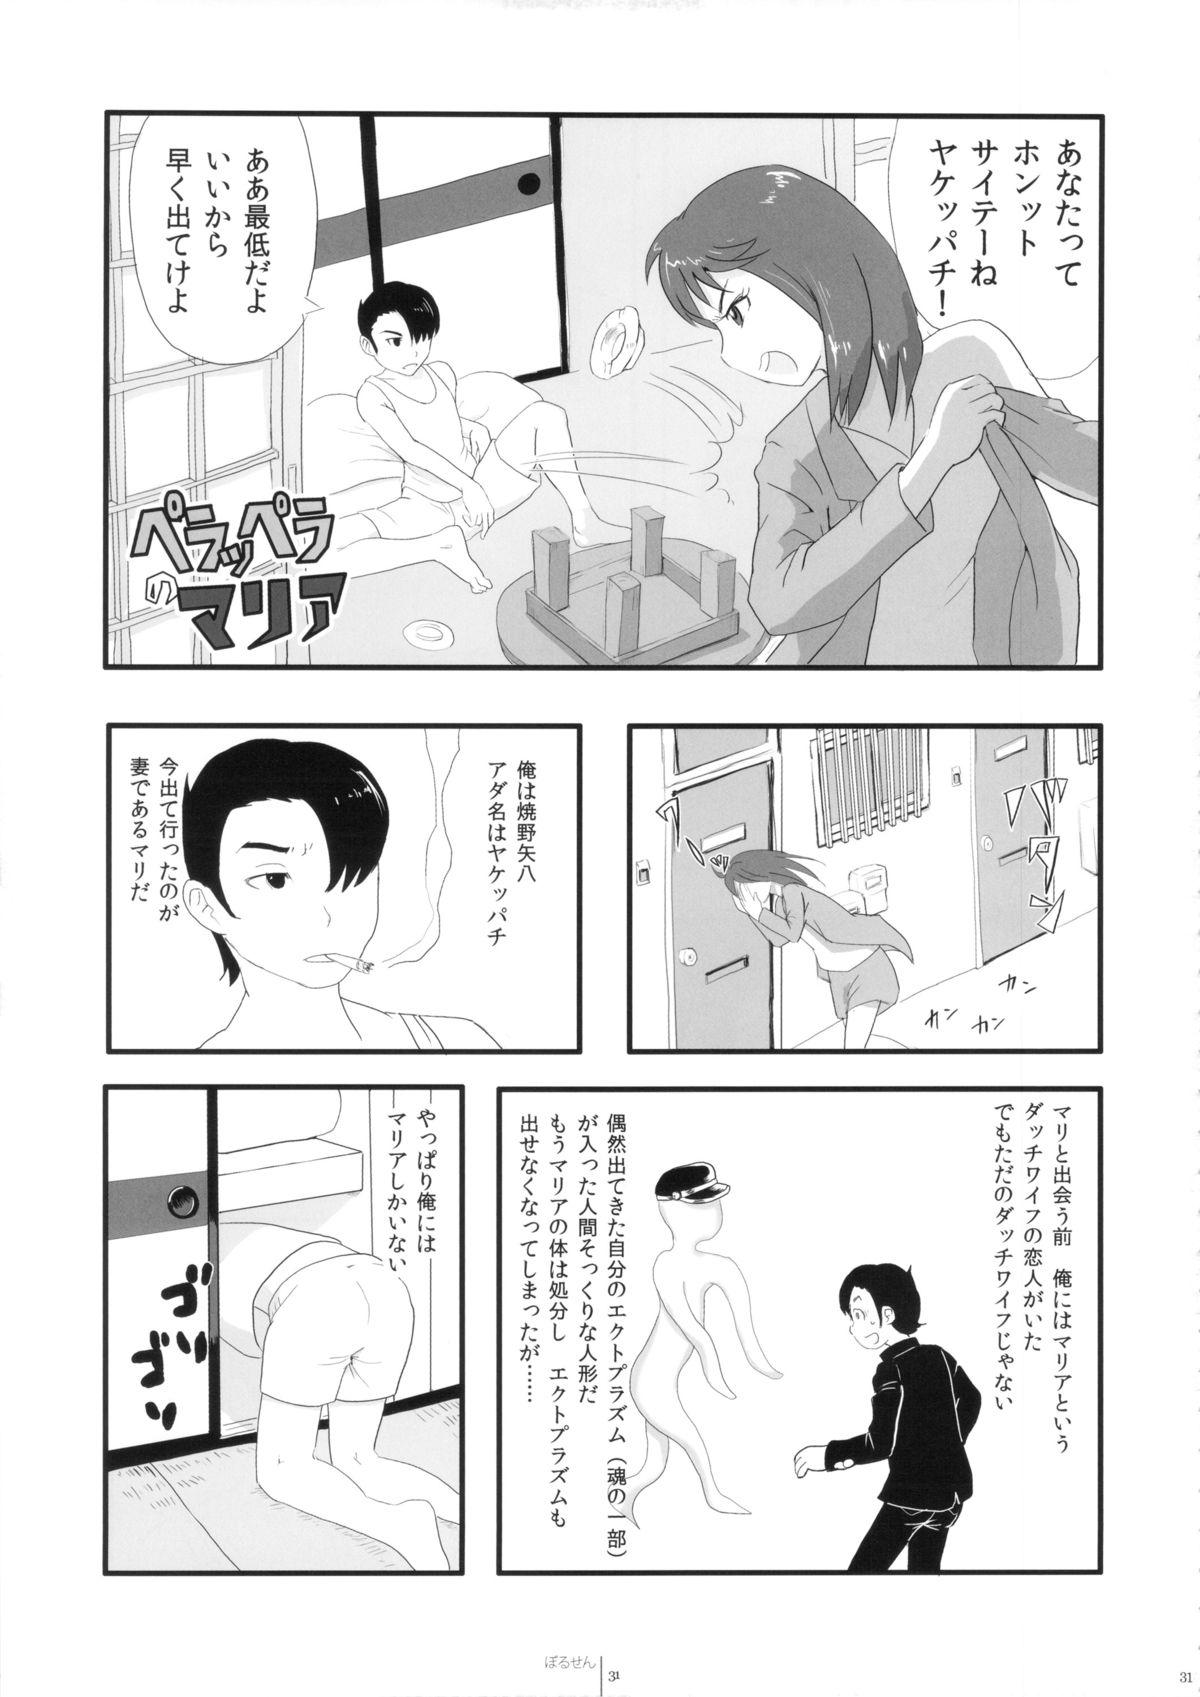 FLOUR2 Tezuka Manga Graffiti 30